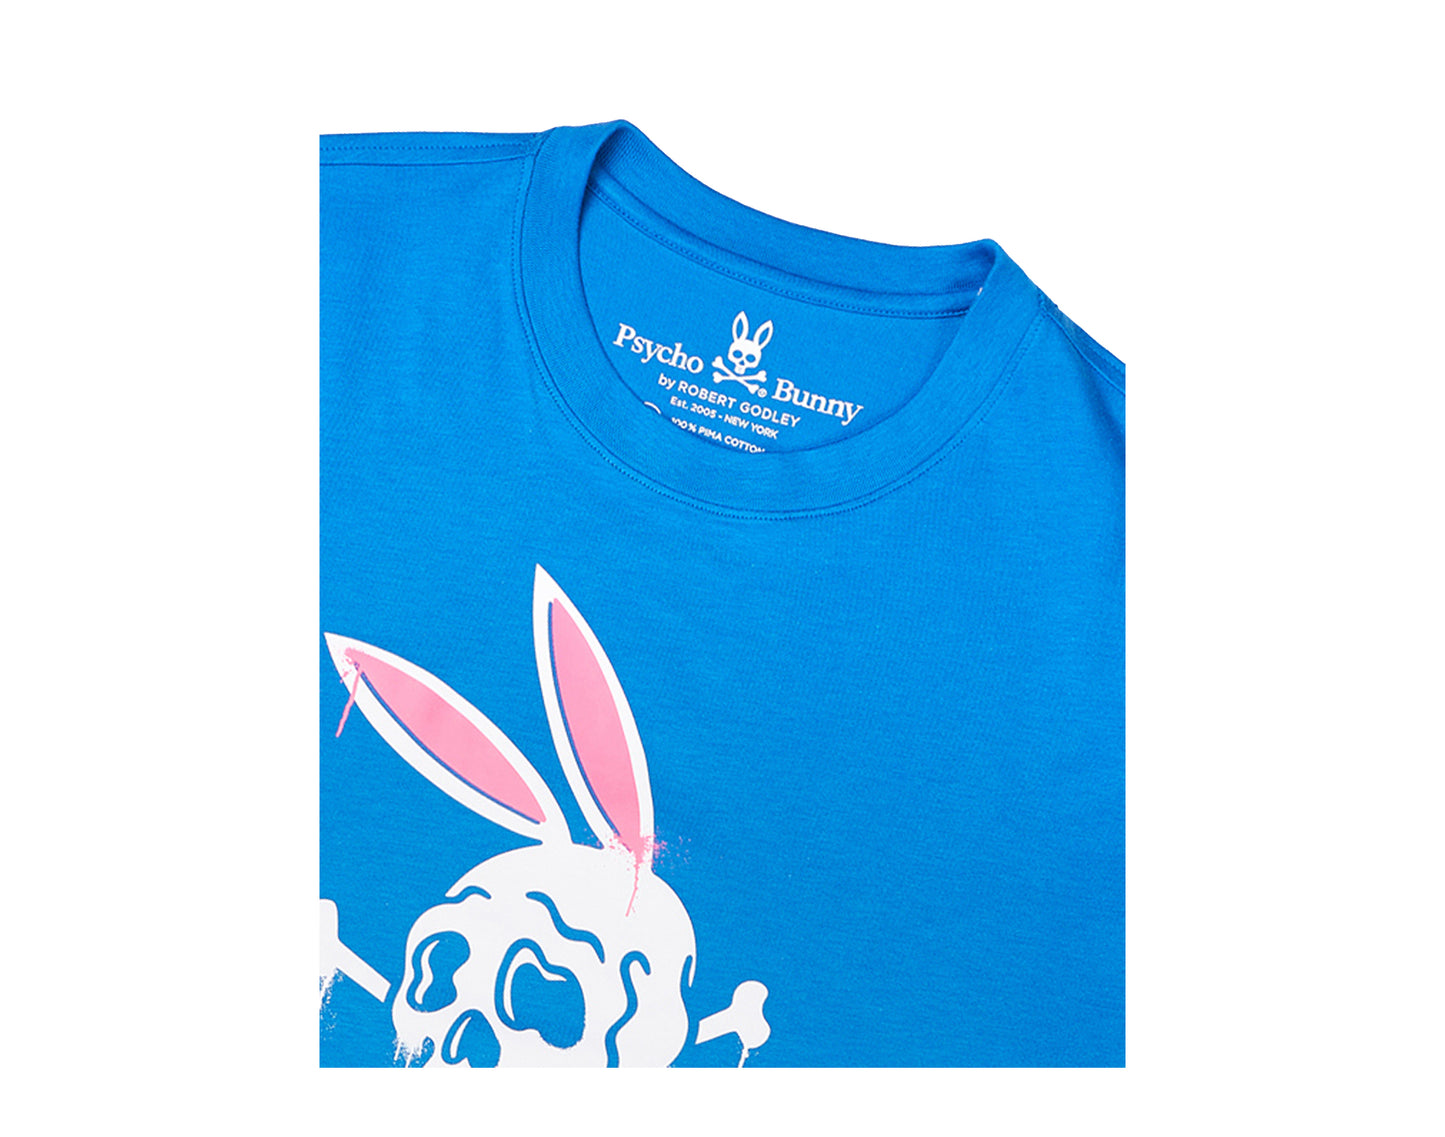 Psycho Bunny Gorton Skull Graphic Seaport Blue Men's Tee Shirt B6U368F1PC-SPR